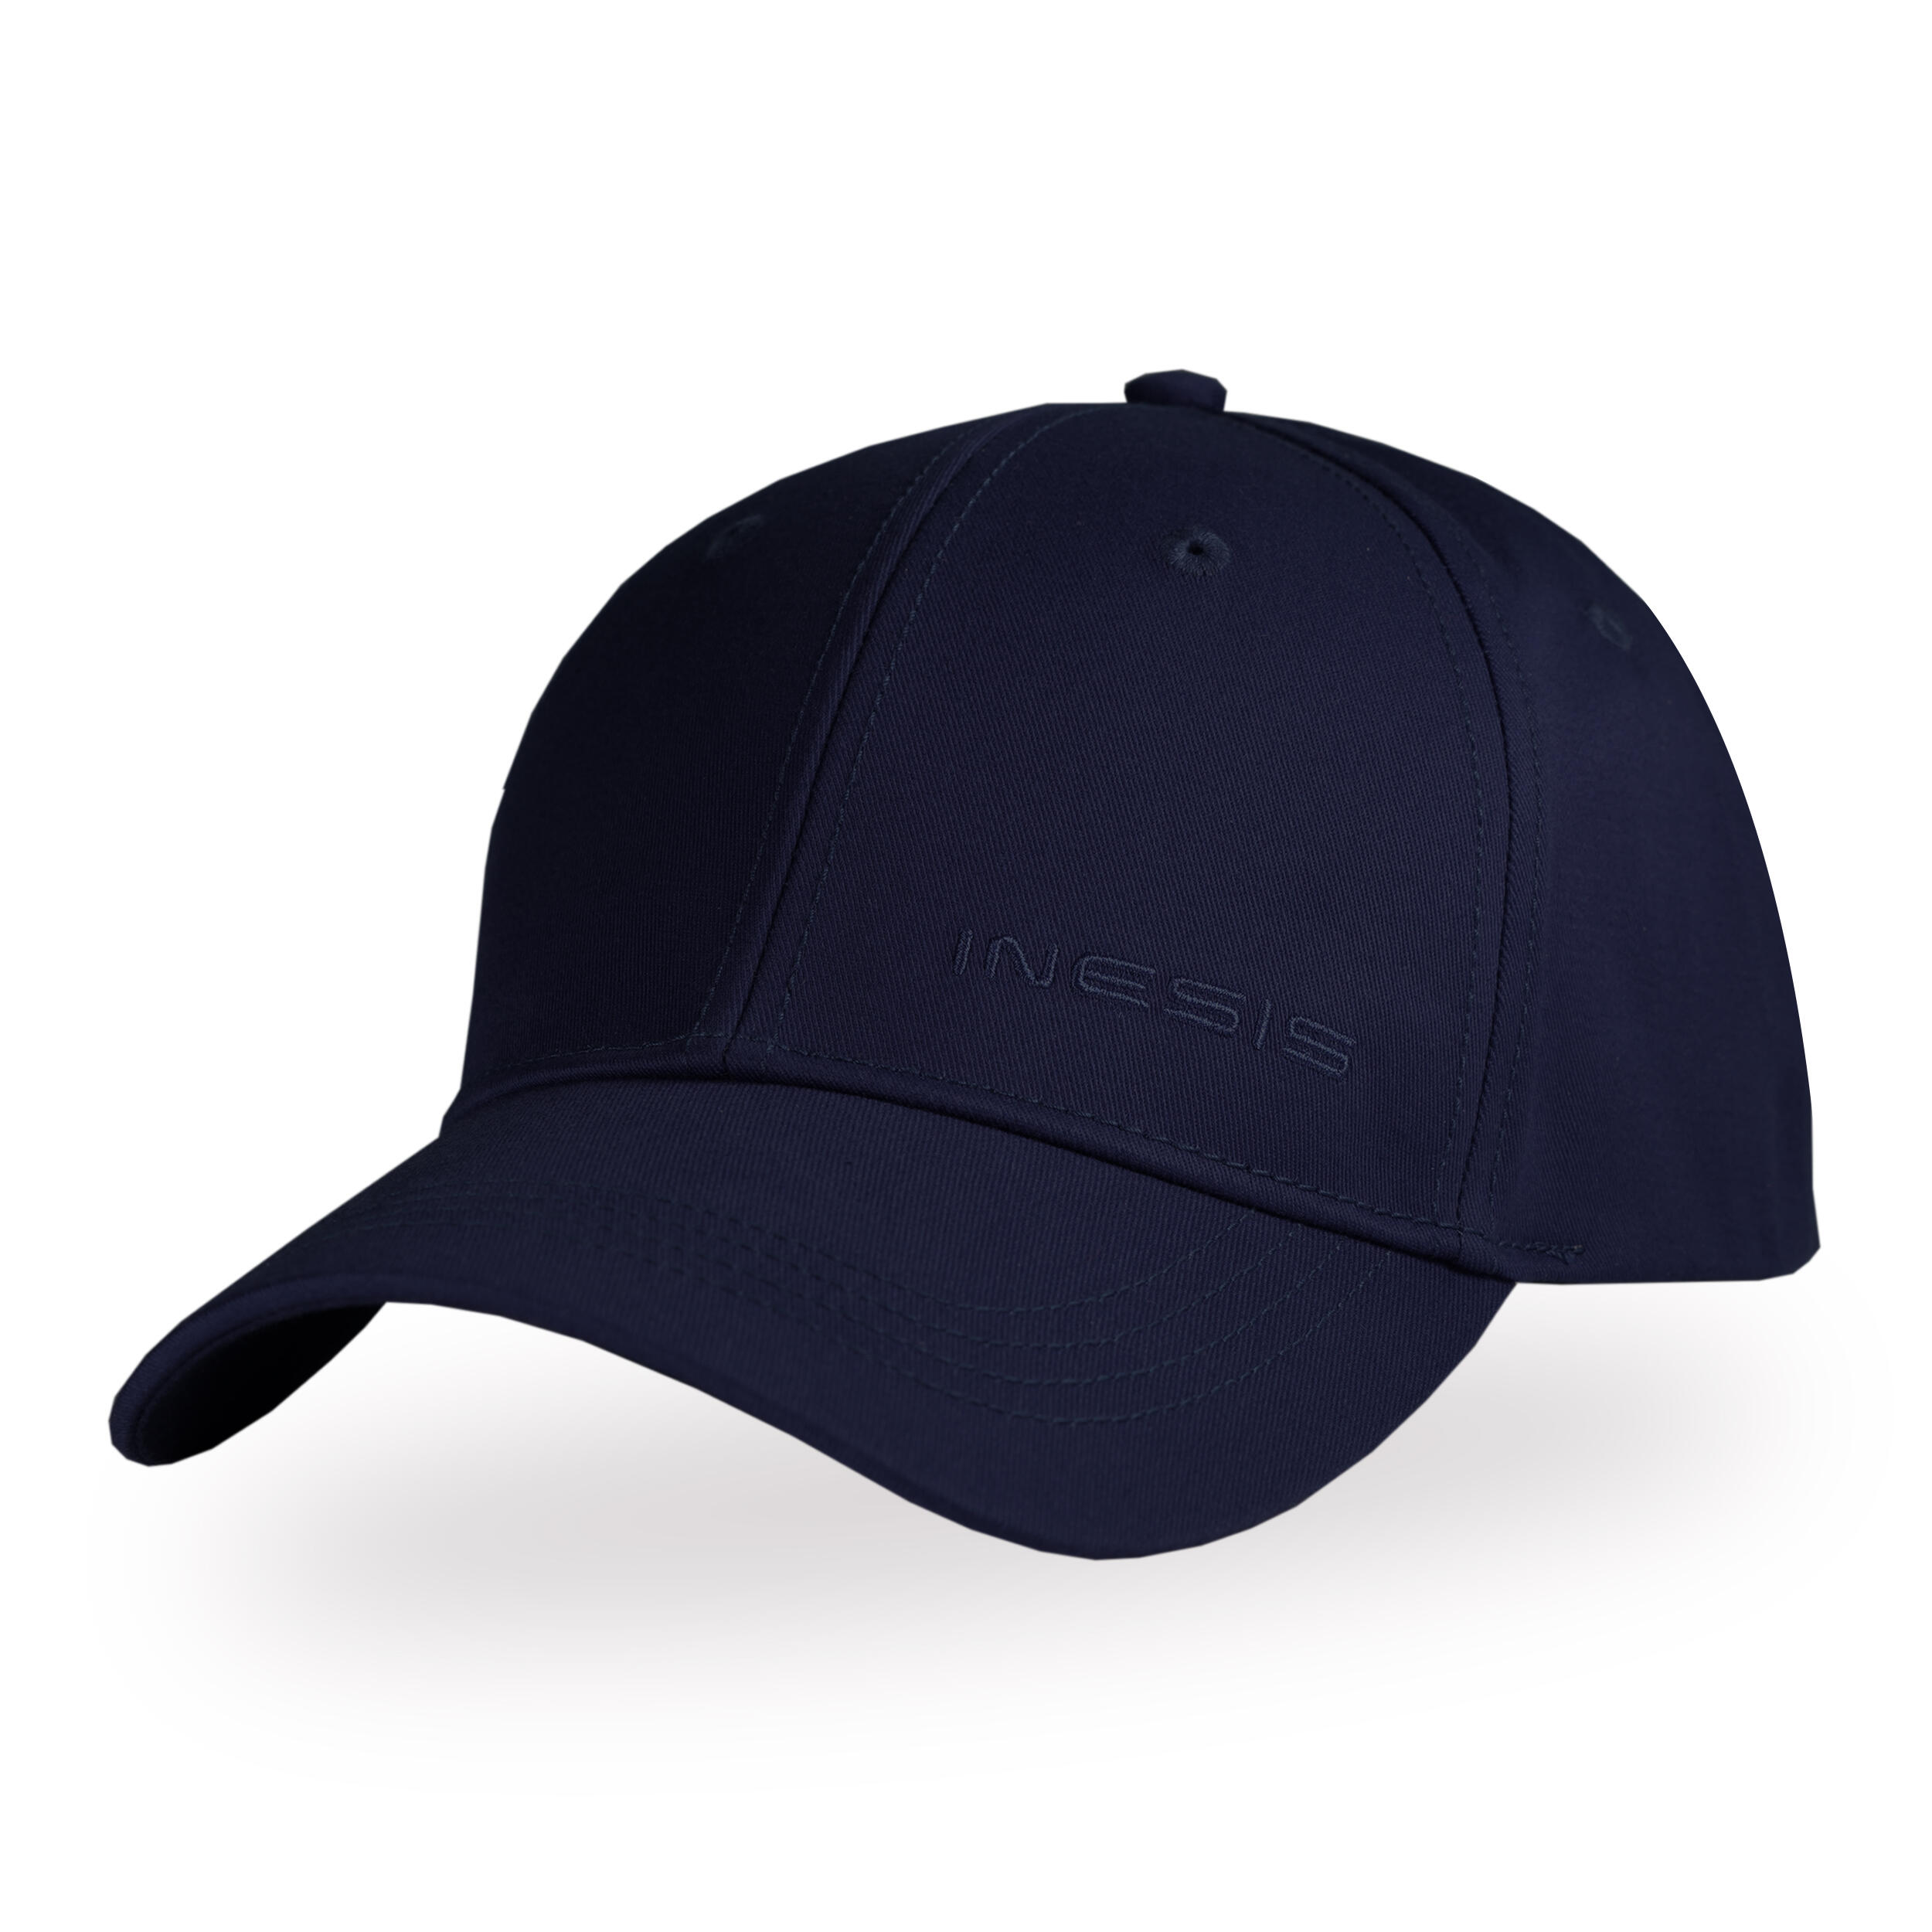 INESIS Adult's golf cap MW500 navy blue